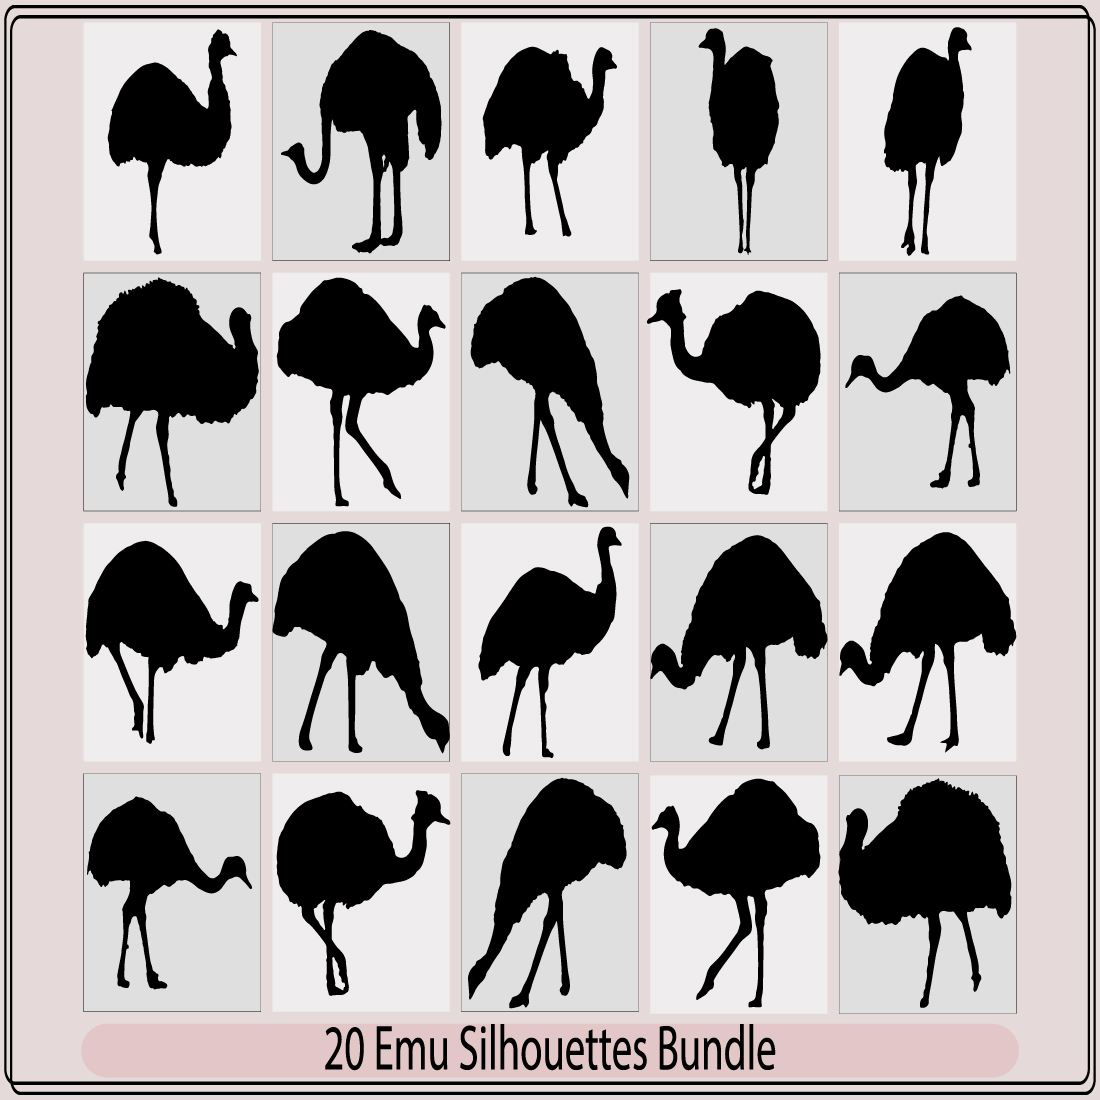 Emu silhouette,Emu vector silhouette, Emu bird,silhouette of emu,Emu bird vector silhouette cover image.